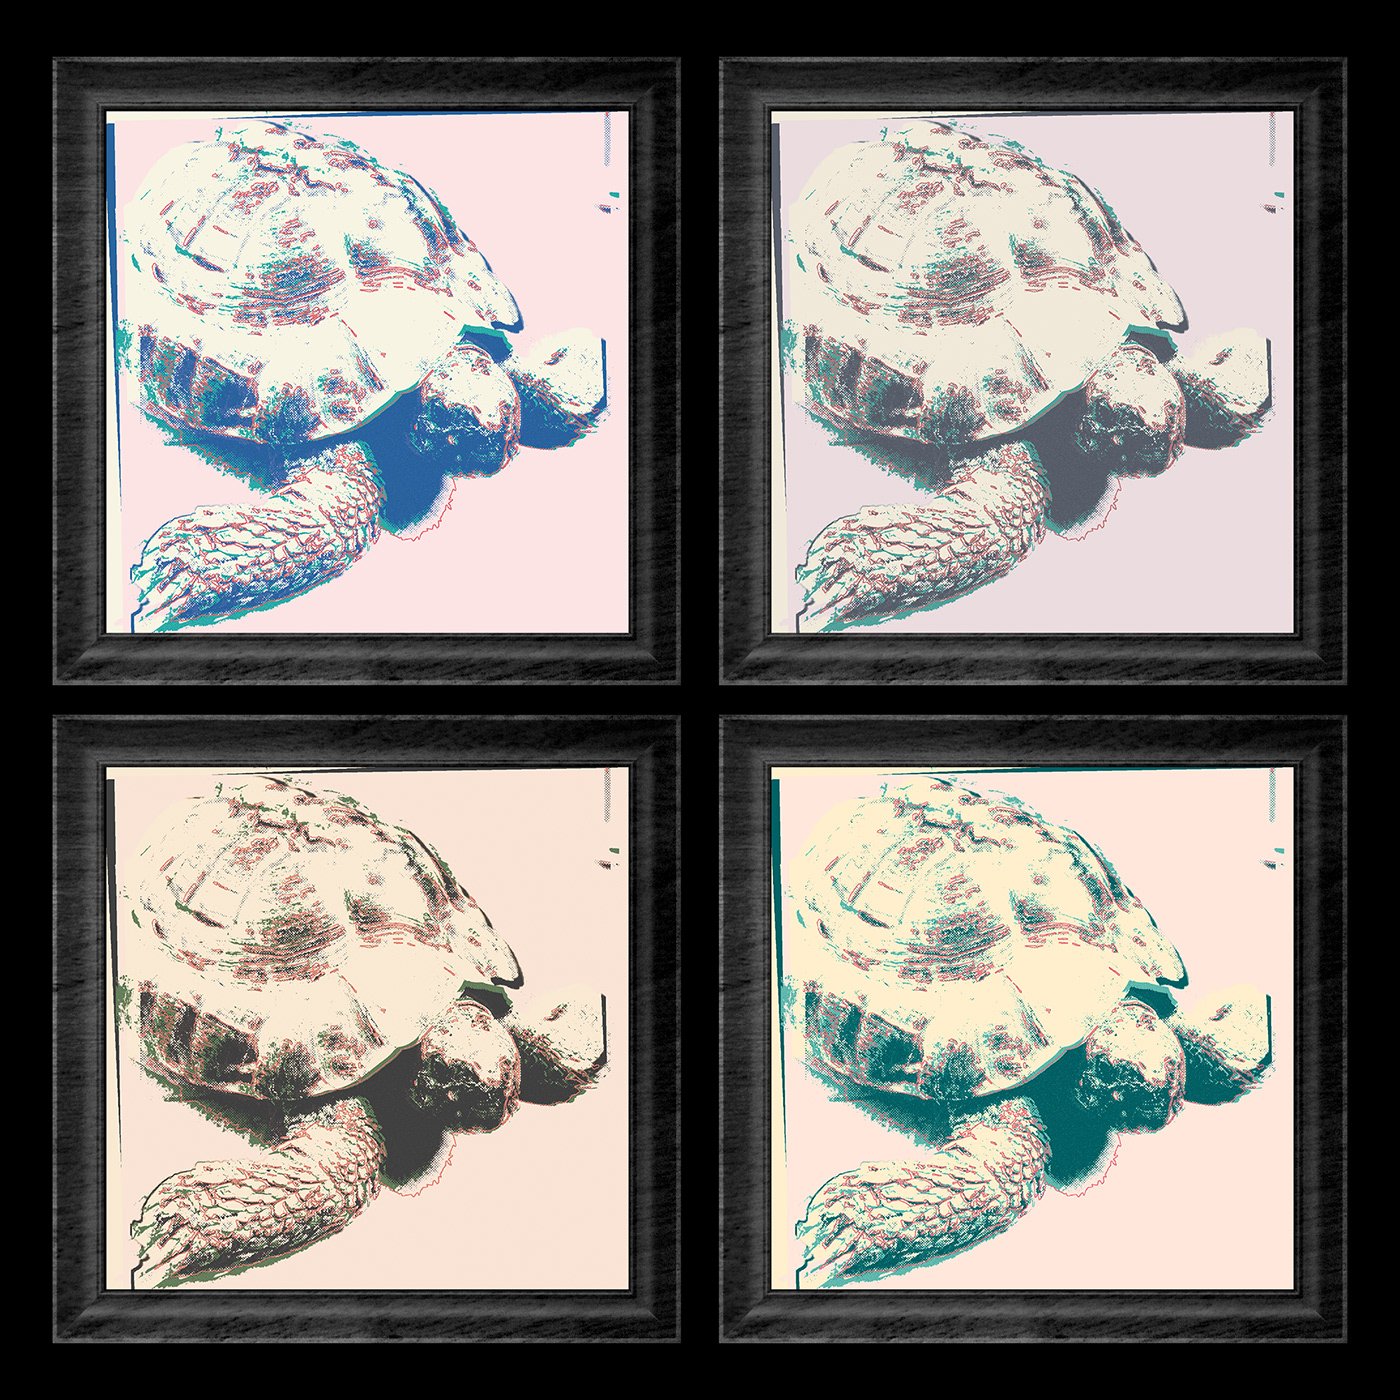 art behun Campbells digital illustration ladies and gentlemans pop Pop Art poster Turtle warhol